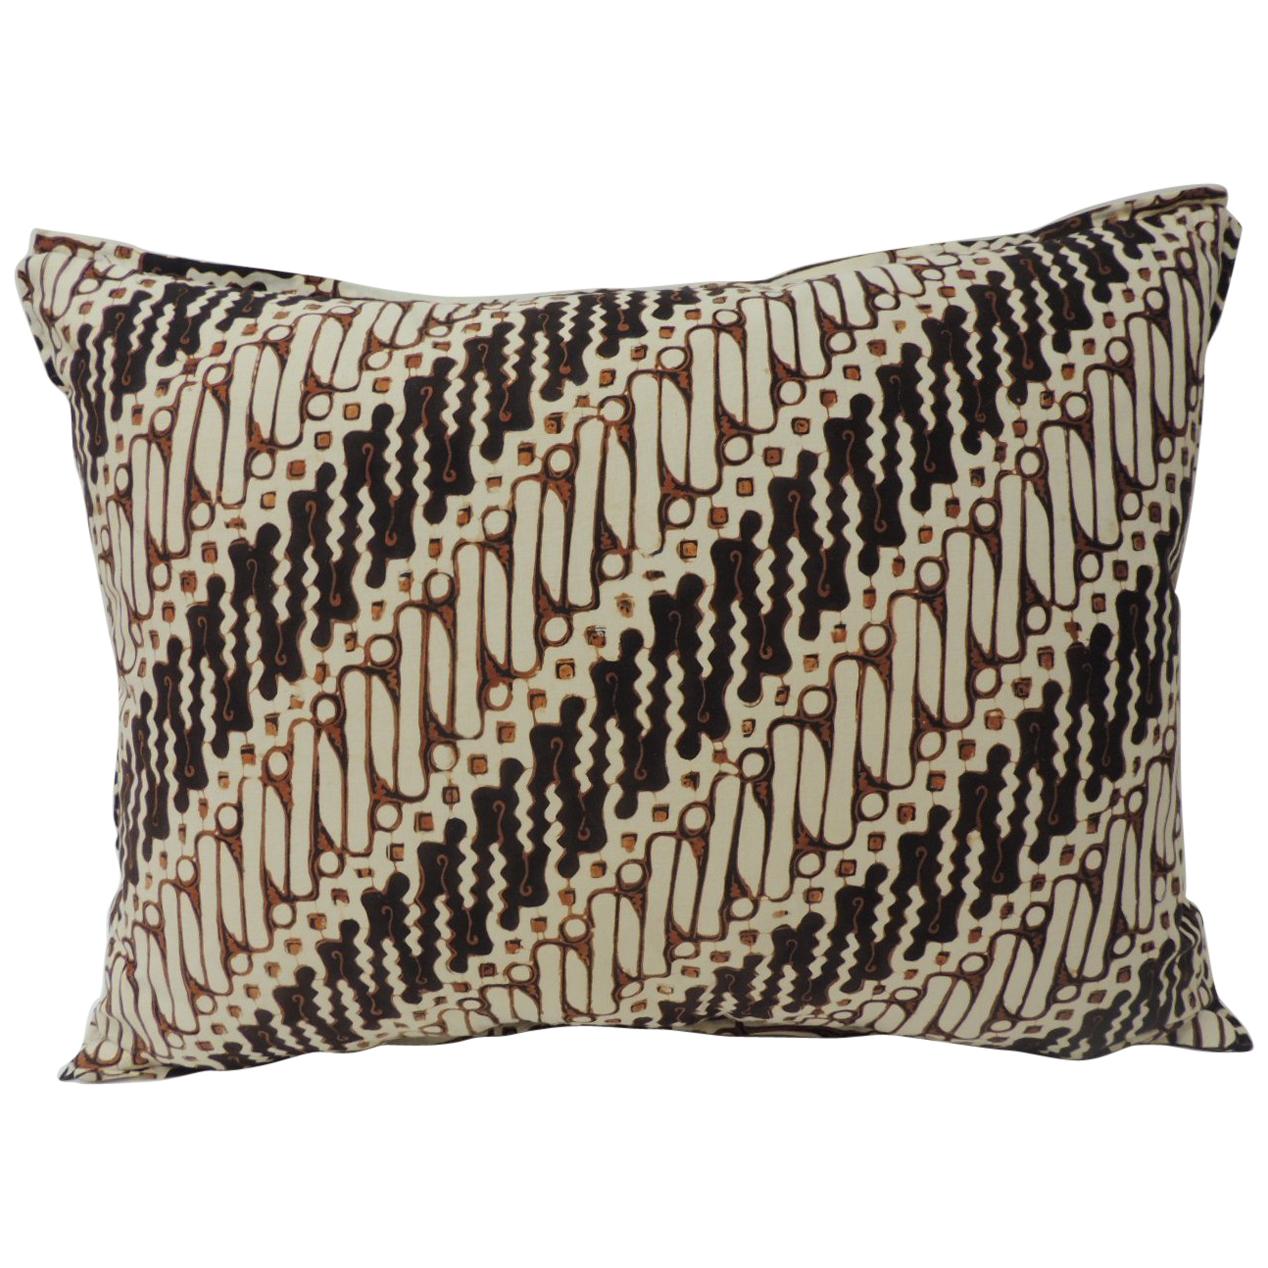 Vintage Brown and Black Batik Decorative Bolsters Pillows